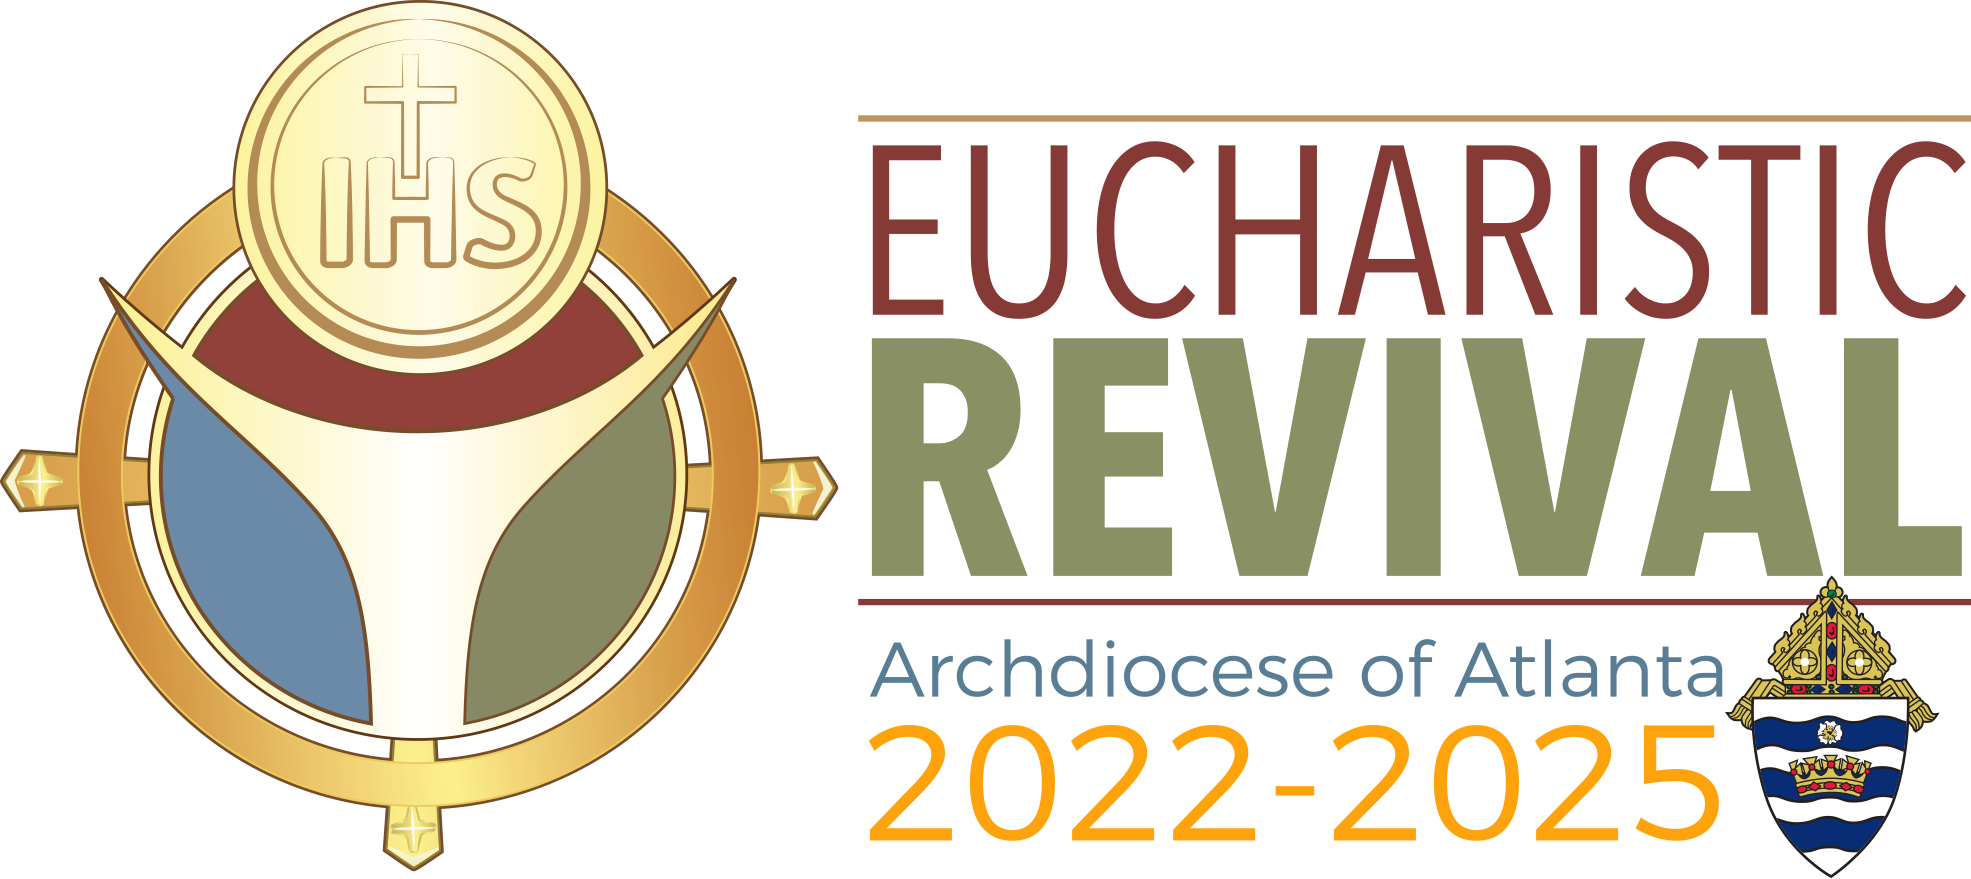 Eucharistic Revival archdiocese of atlanta 2022-2025